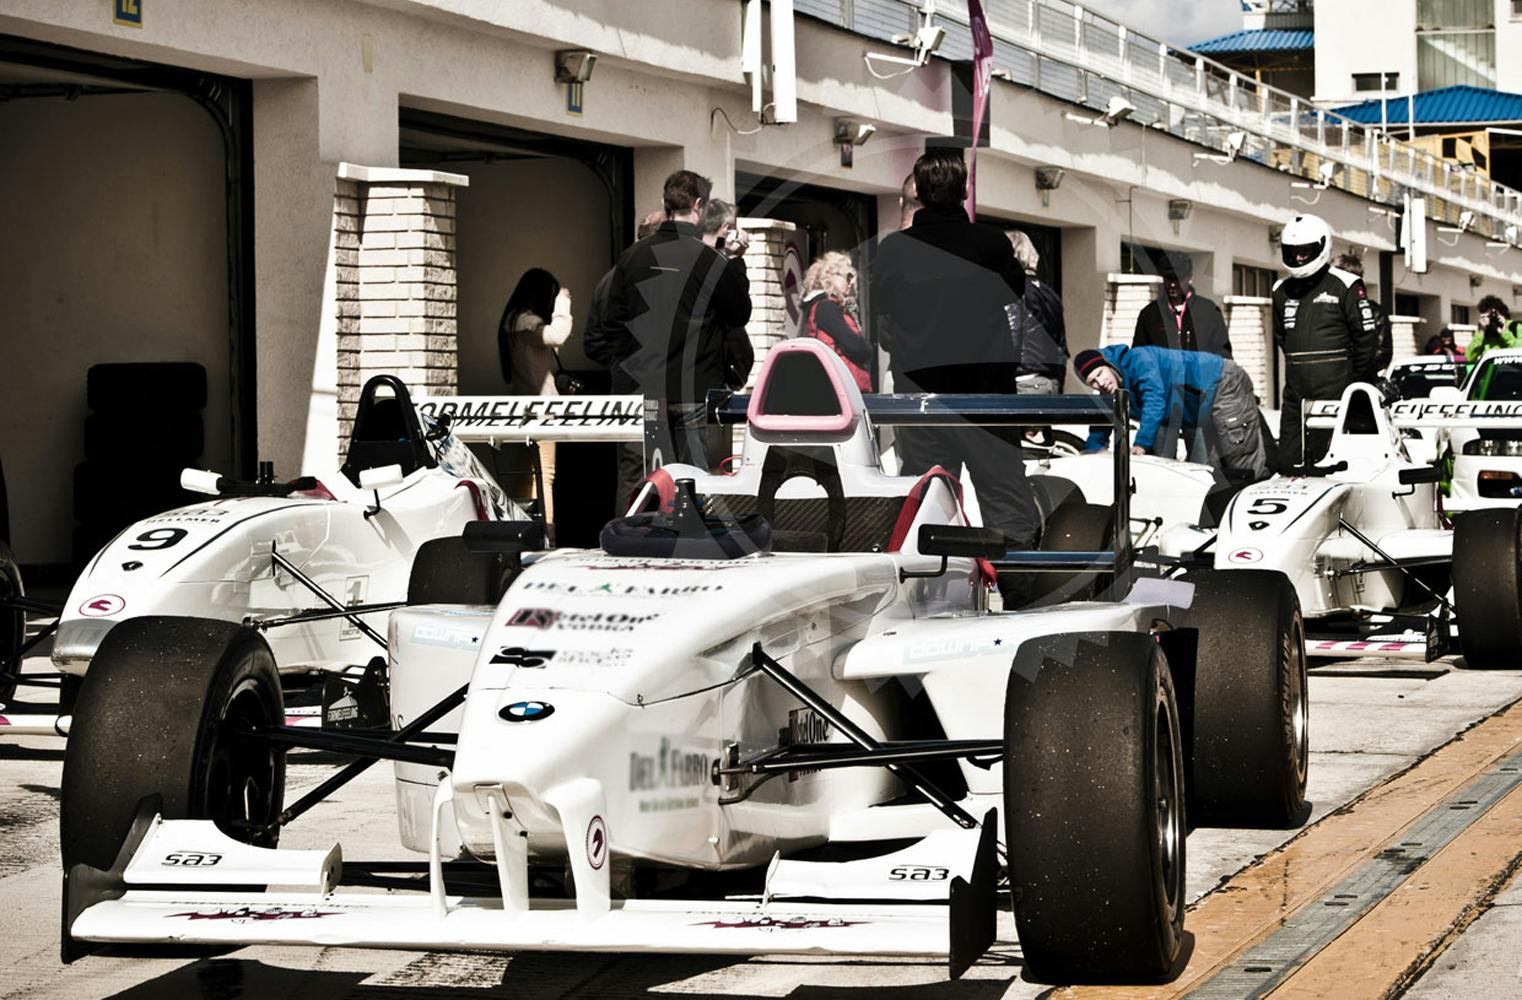 Formel fahren | Race Package | Theorie und Rennpraxis